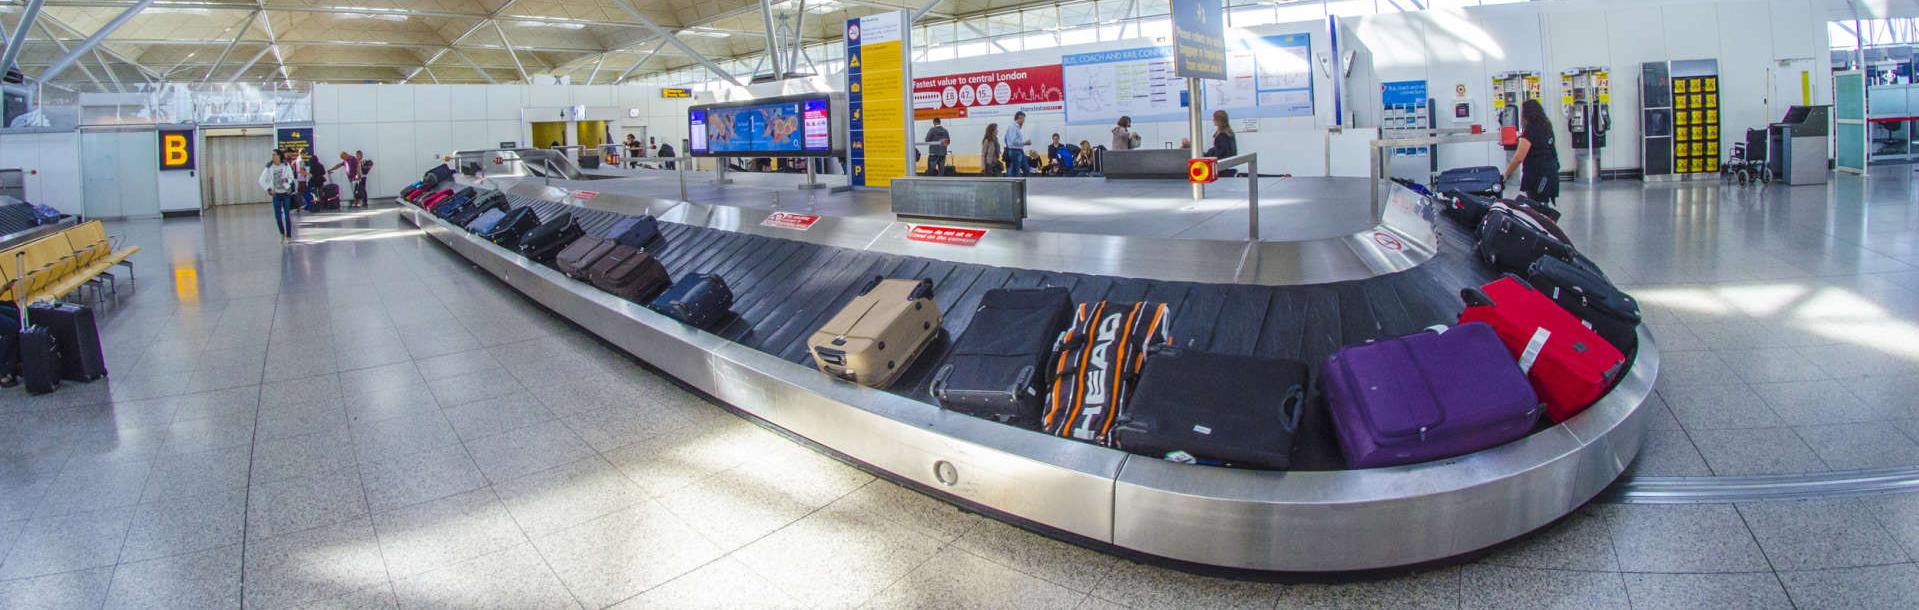 Airport Baggage Carosel